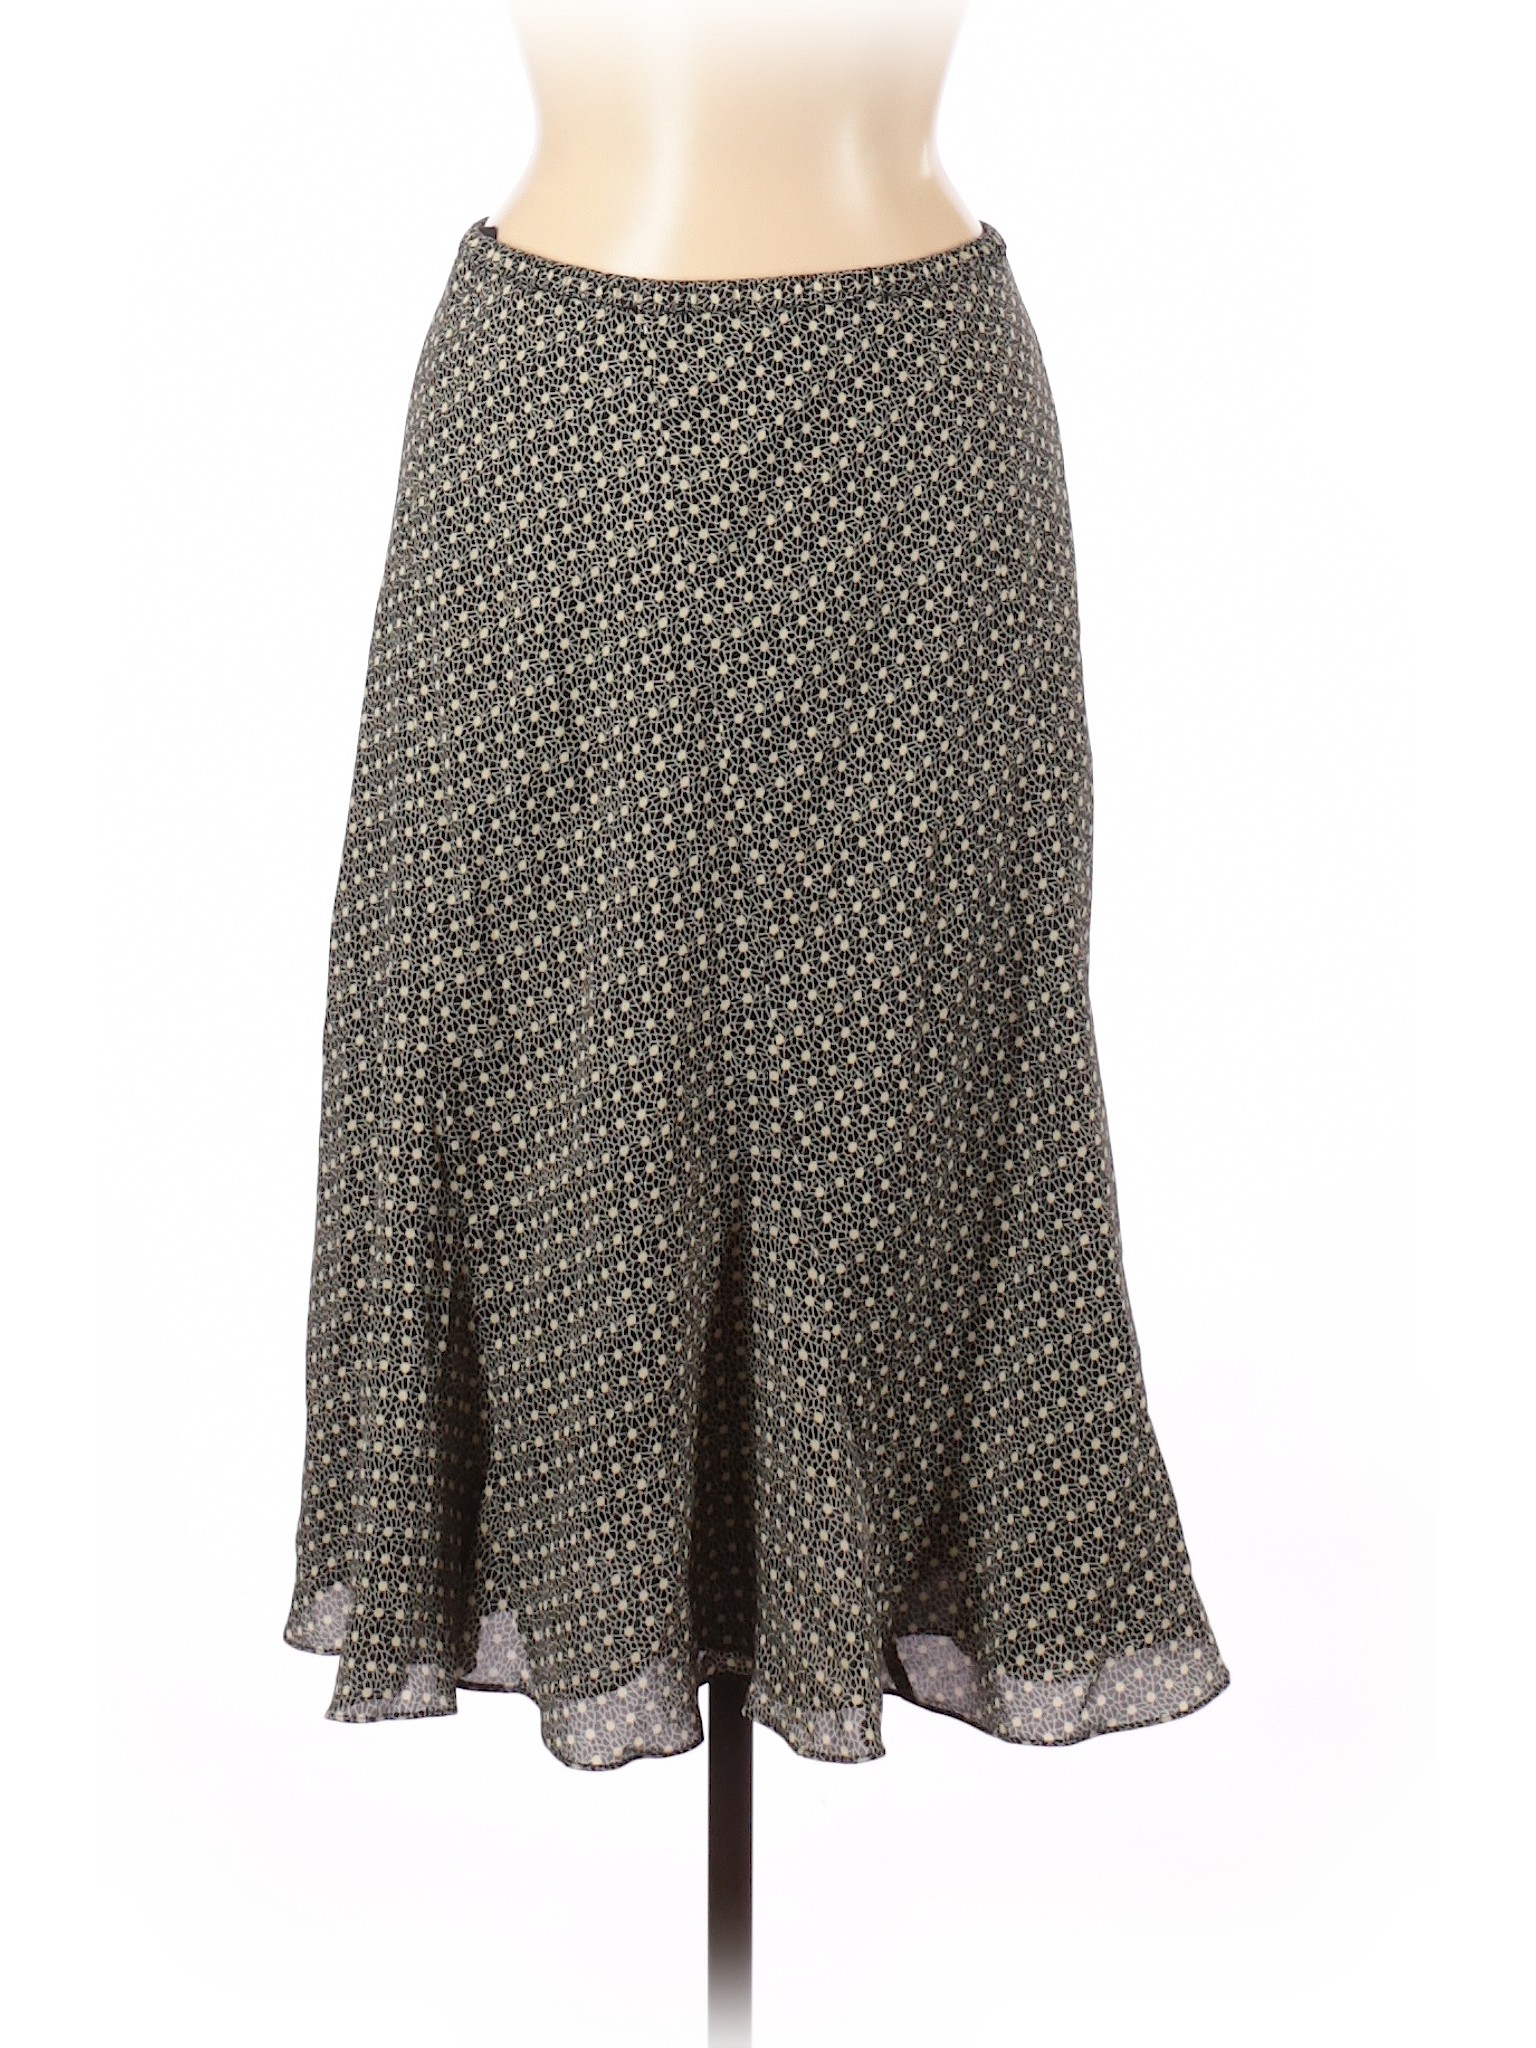 Jones New York Women Brown Silk Skirt 8 | eBay